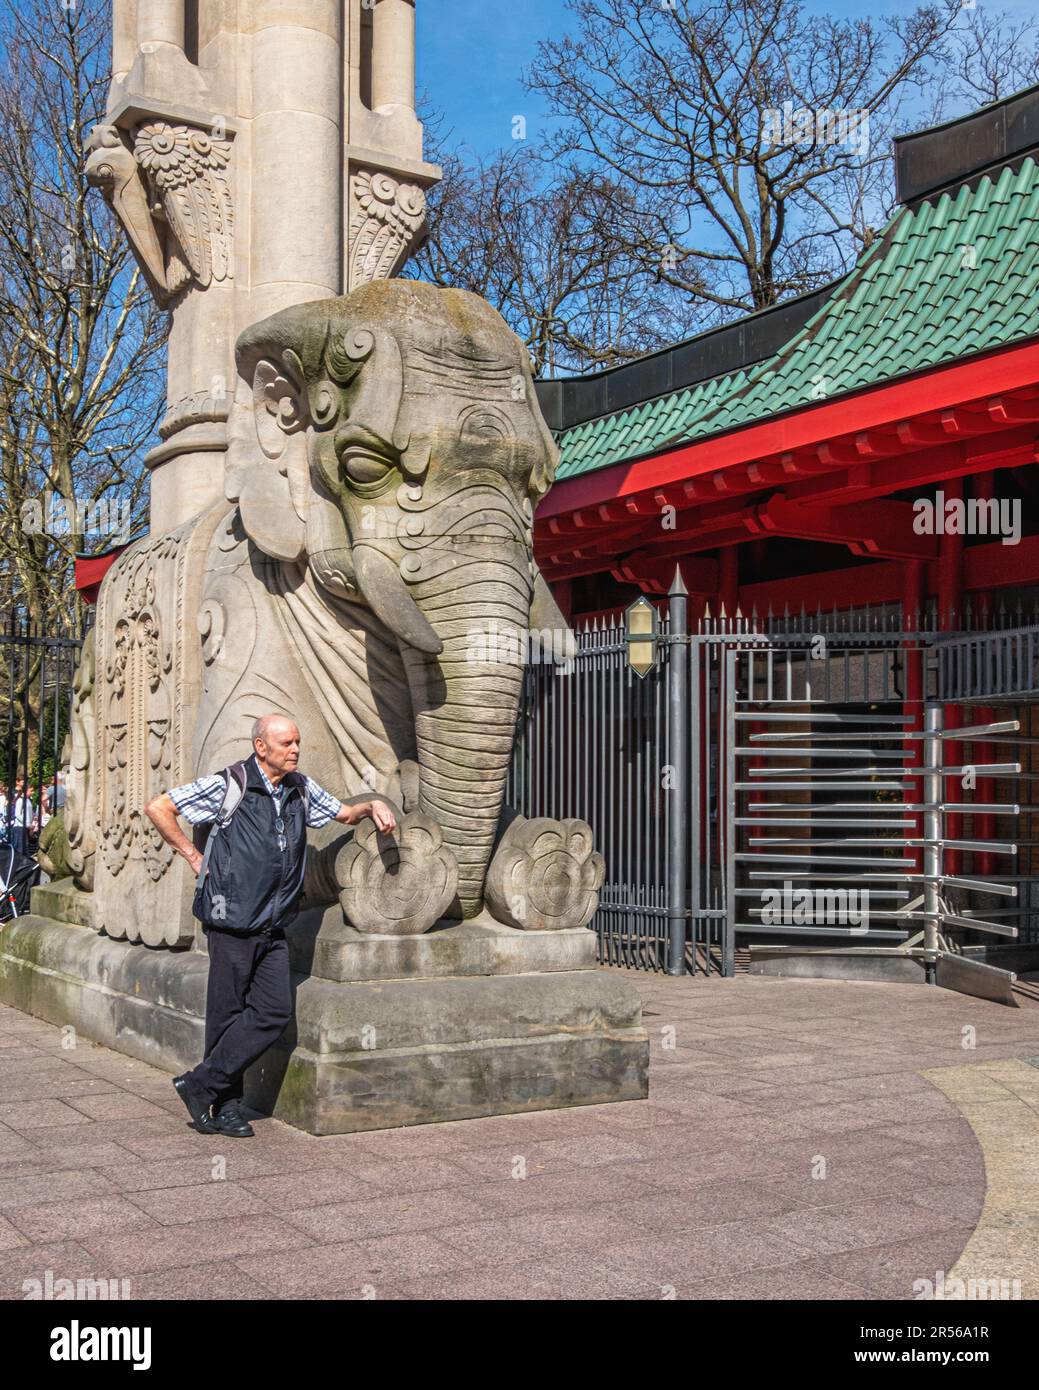 Eingang zum Zoo, alter Mann steht neben lebensgroßer Elefantenskulptur, Budapester straße, Tiergarten, Mitte, Berlin Stockfoto